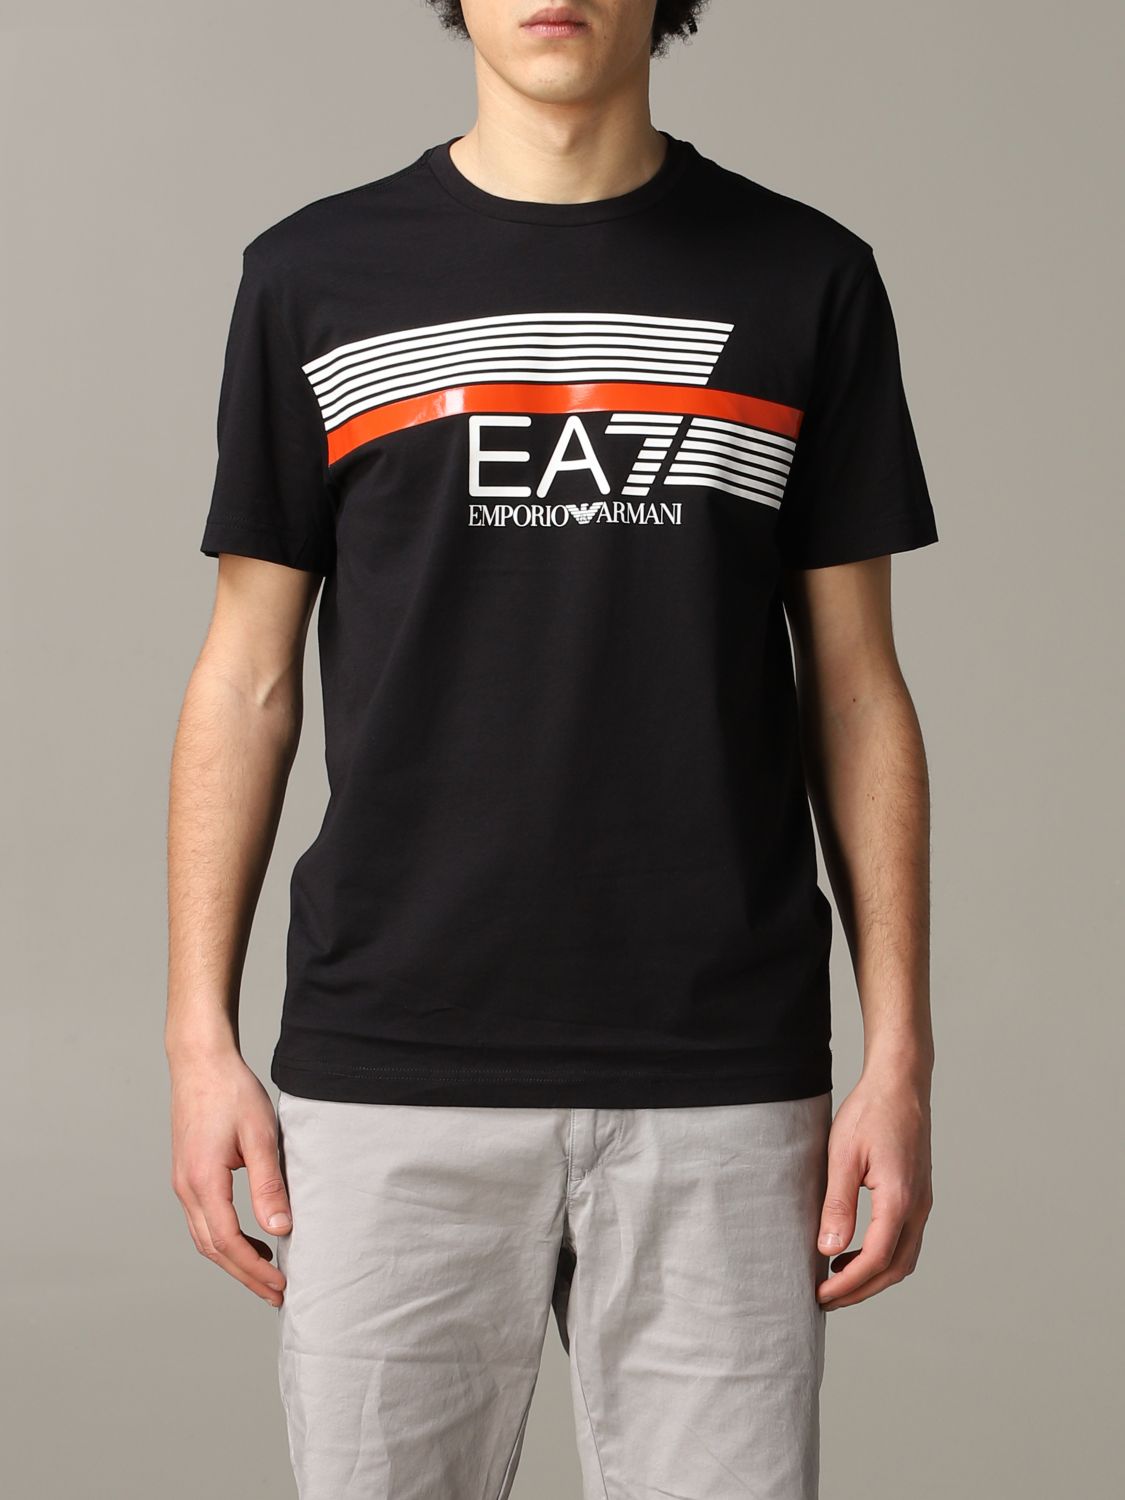 Ea7 Outlet: t-shirt for man - Black | Ea7 t-shirt 3HPT34 PJ02Z online ...